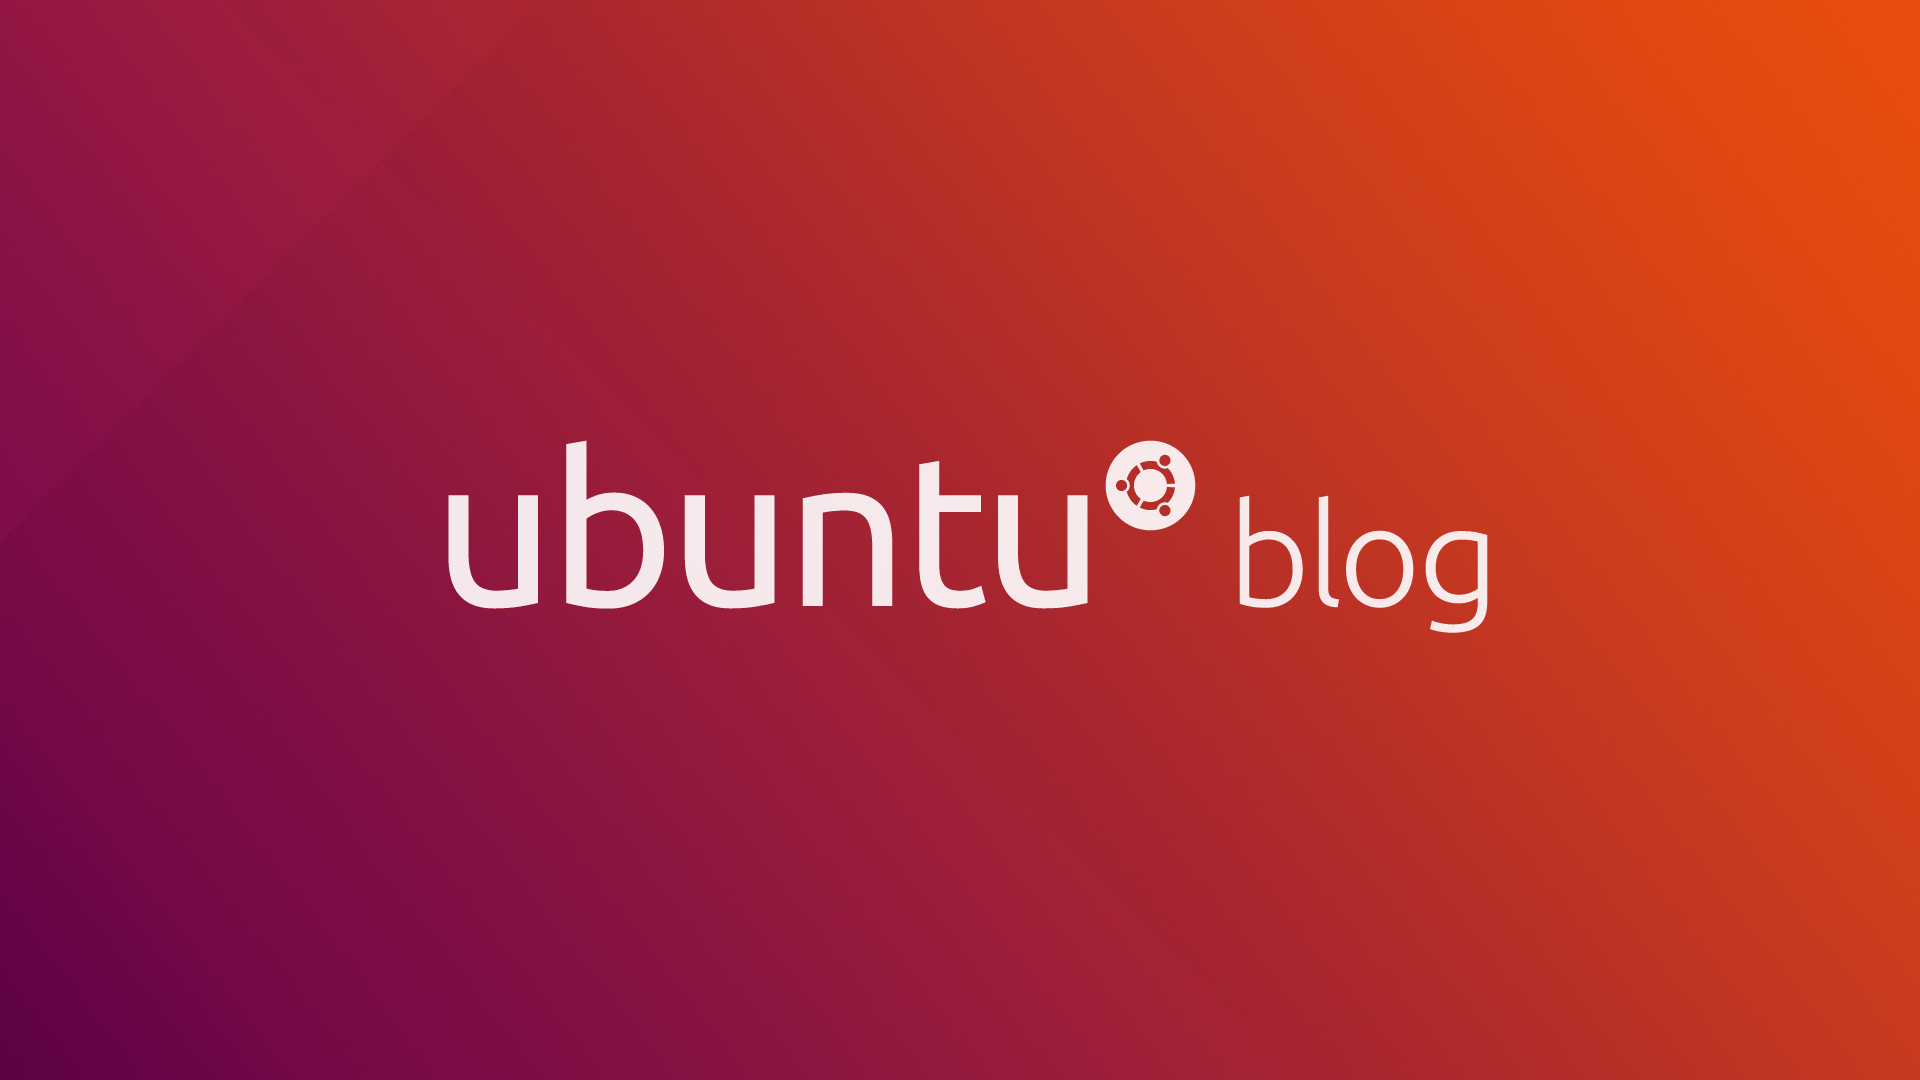 Ubuntu blog